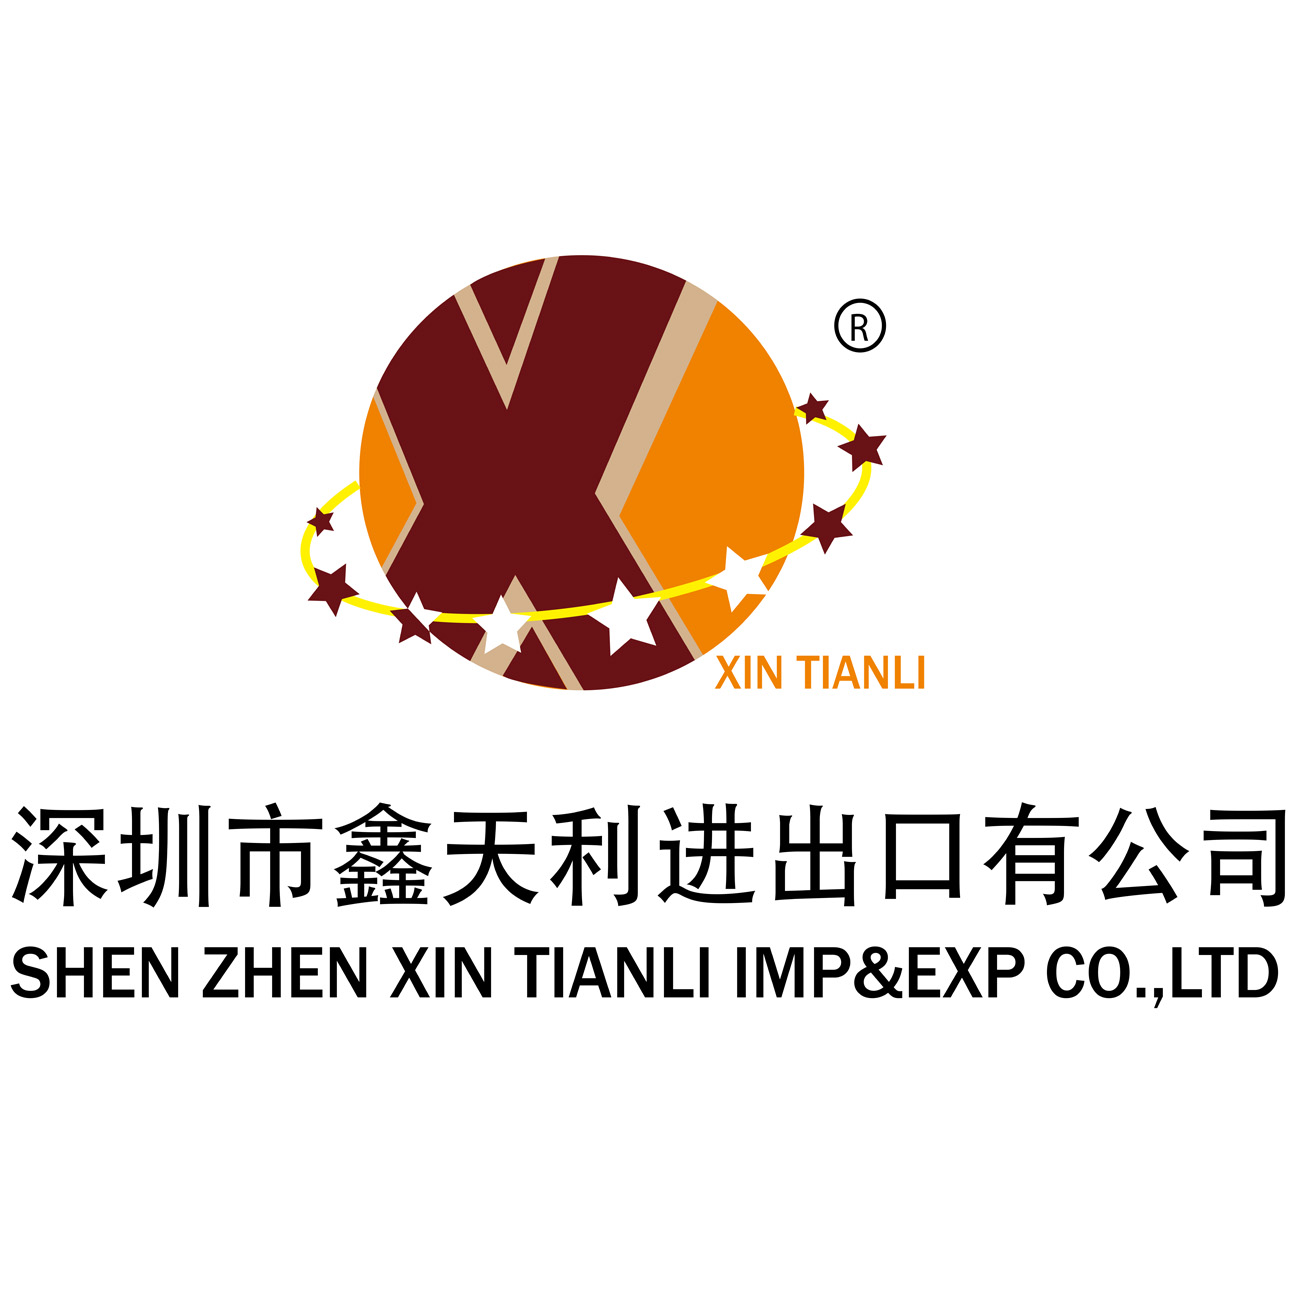 SHENZHEN XIN TIANLI IMPORT & EXPORT CO LTD